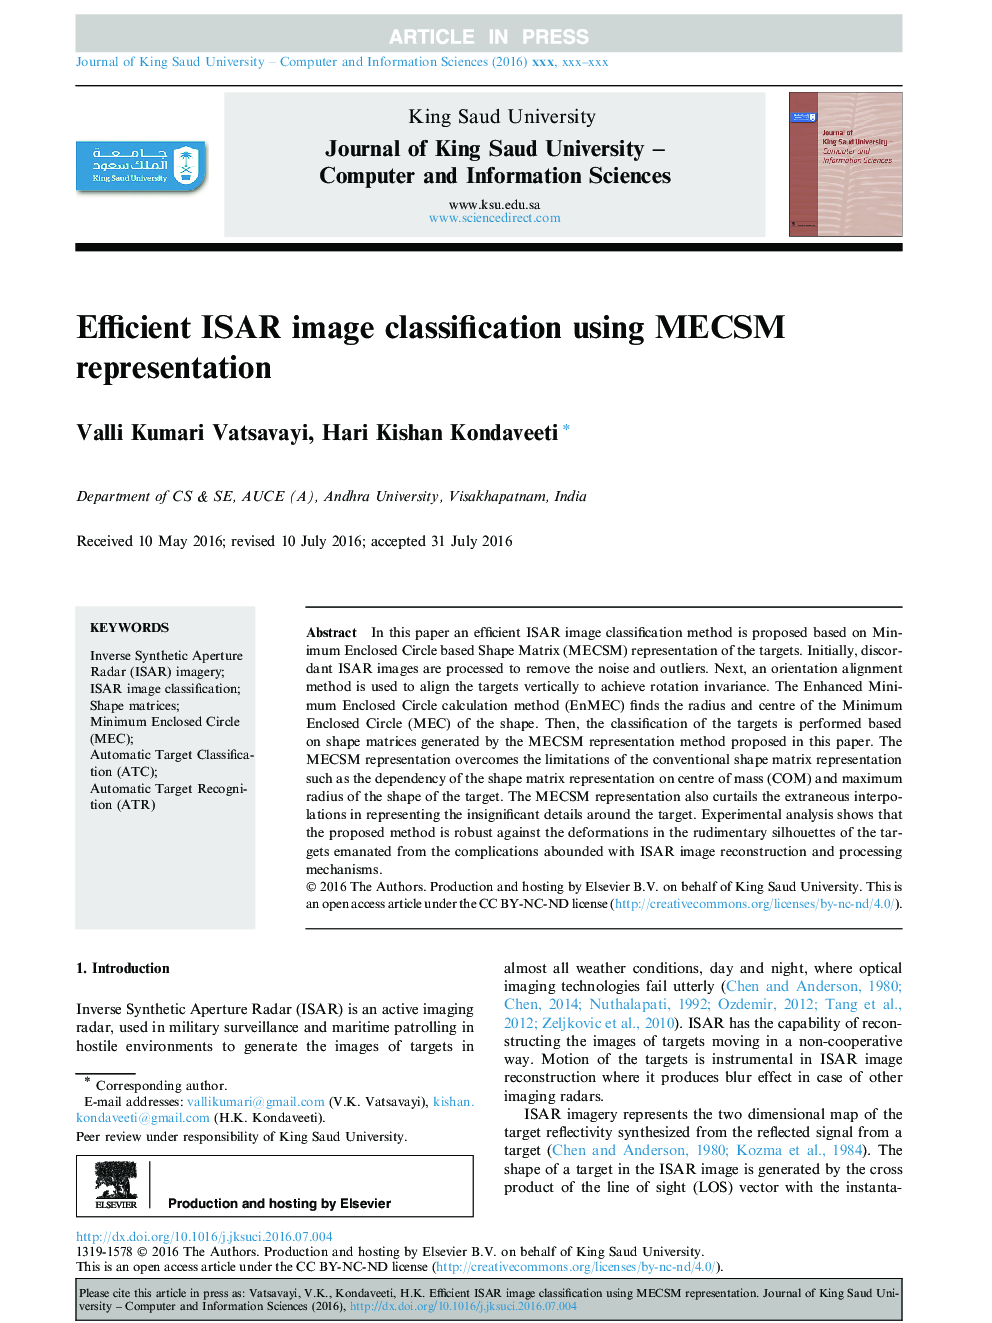 Efficient ISAR image classification using MECSM representation